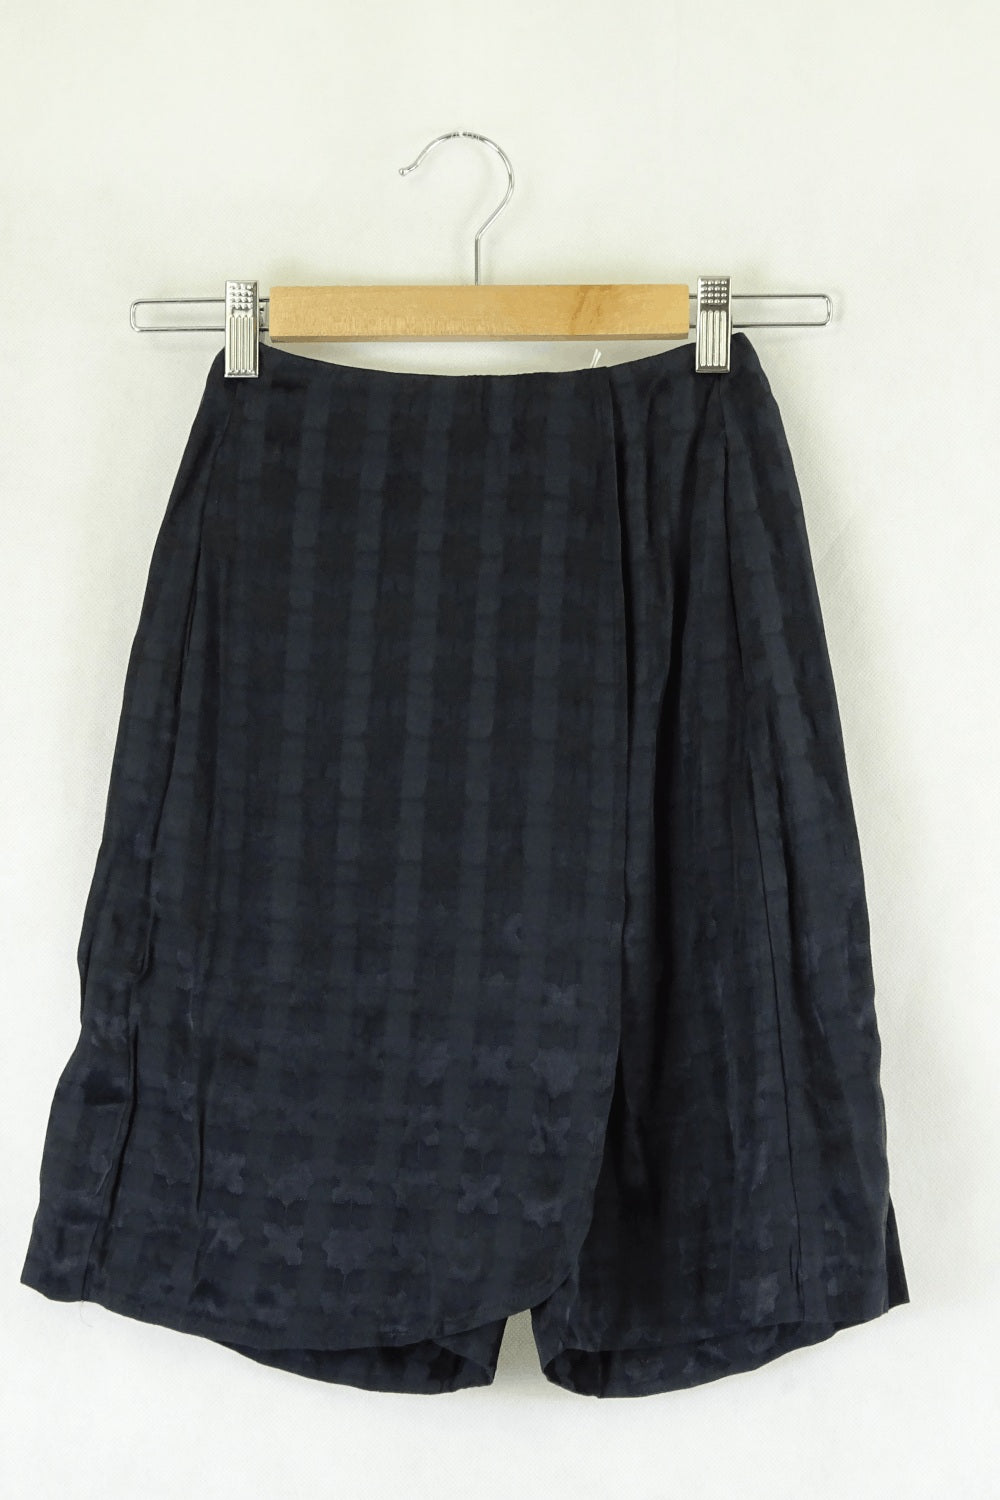 Asos Blue Patterned Shorts 4